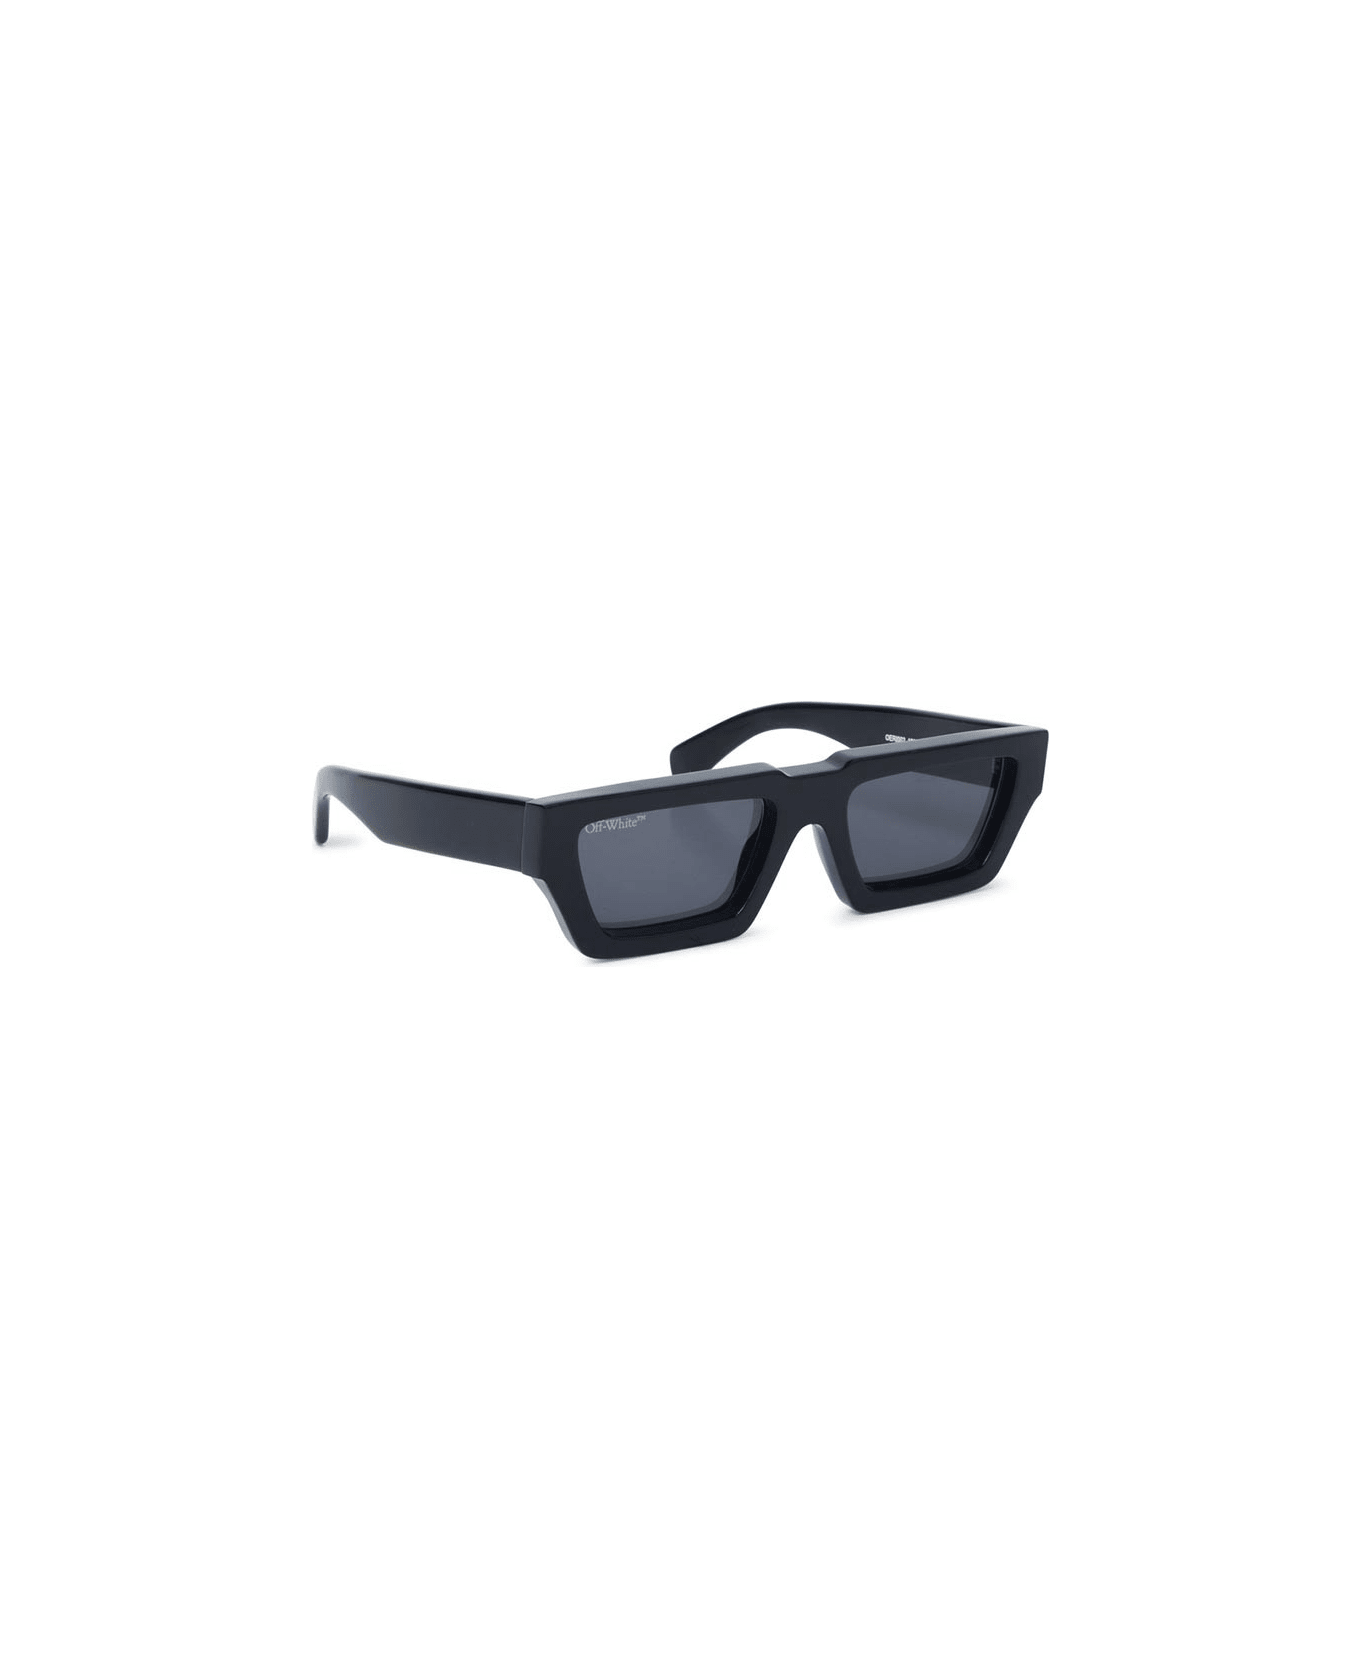 Off-White Manchester Sunglasses - Nero/Grigio サングラス